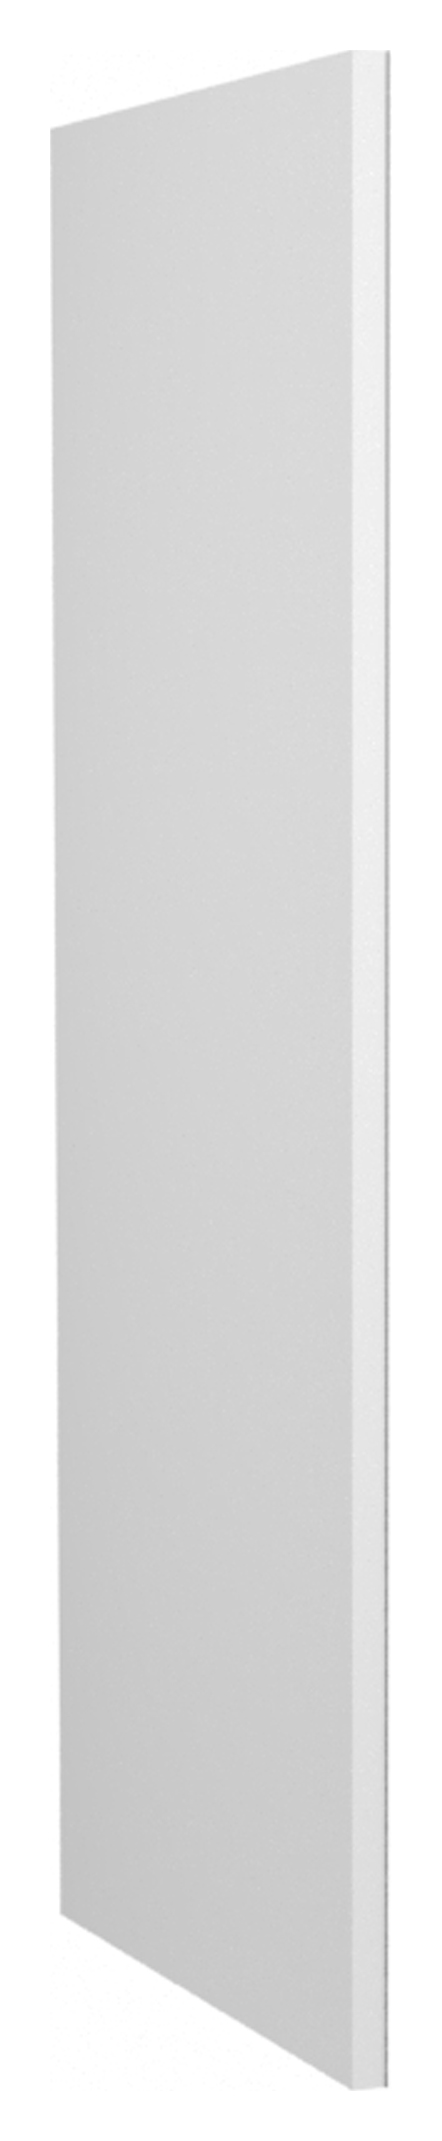 Wickes Madison Matt White Decor Wall Panel - 18mm